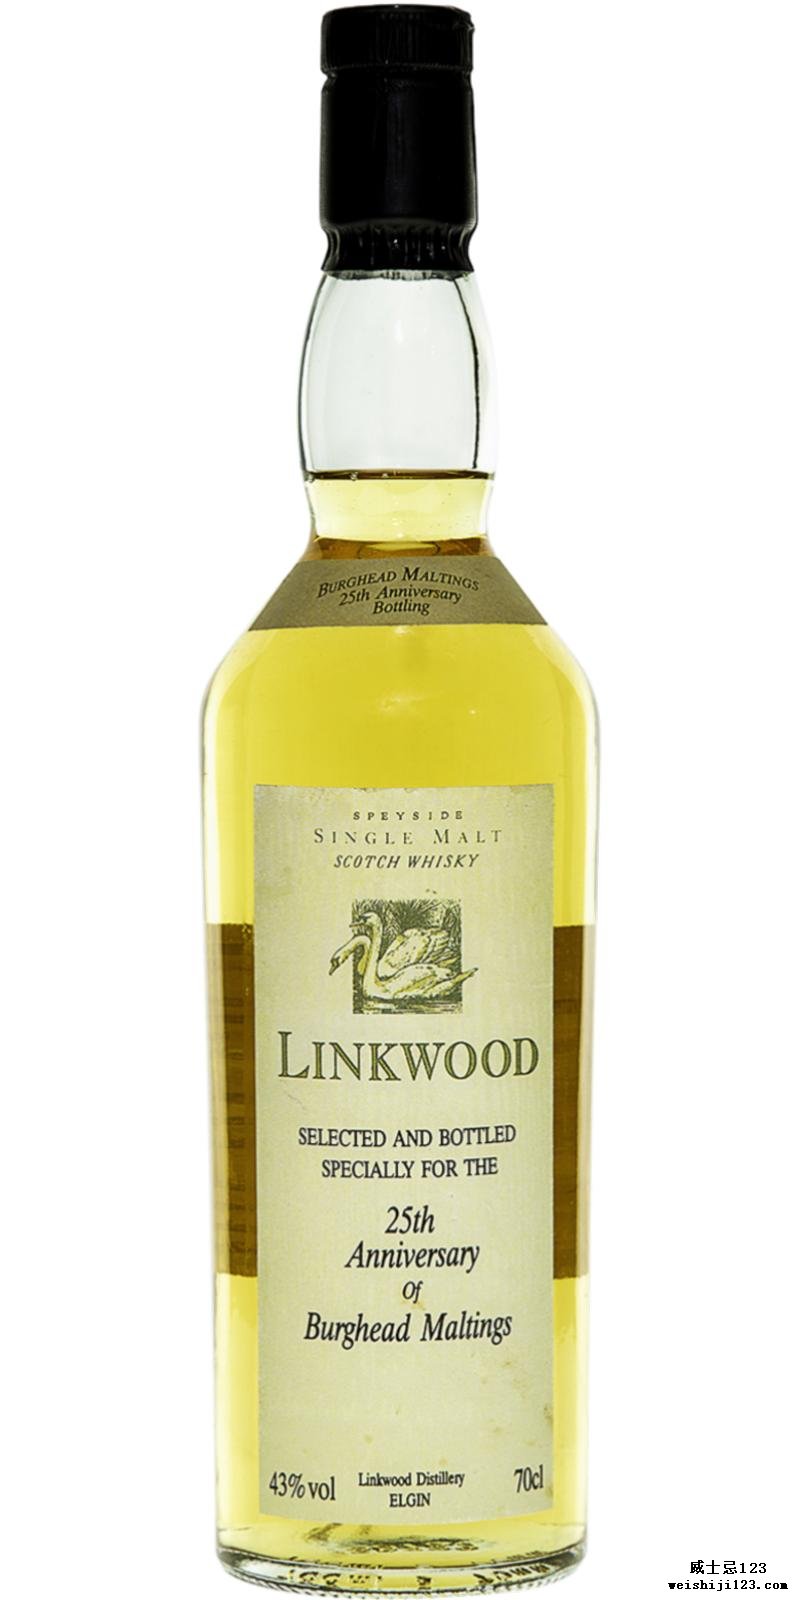 Linkwood 25th Anniversary of Burghead Maltings